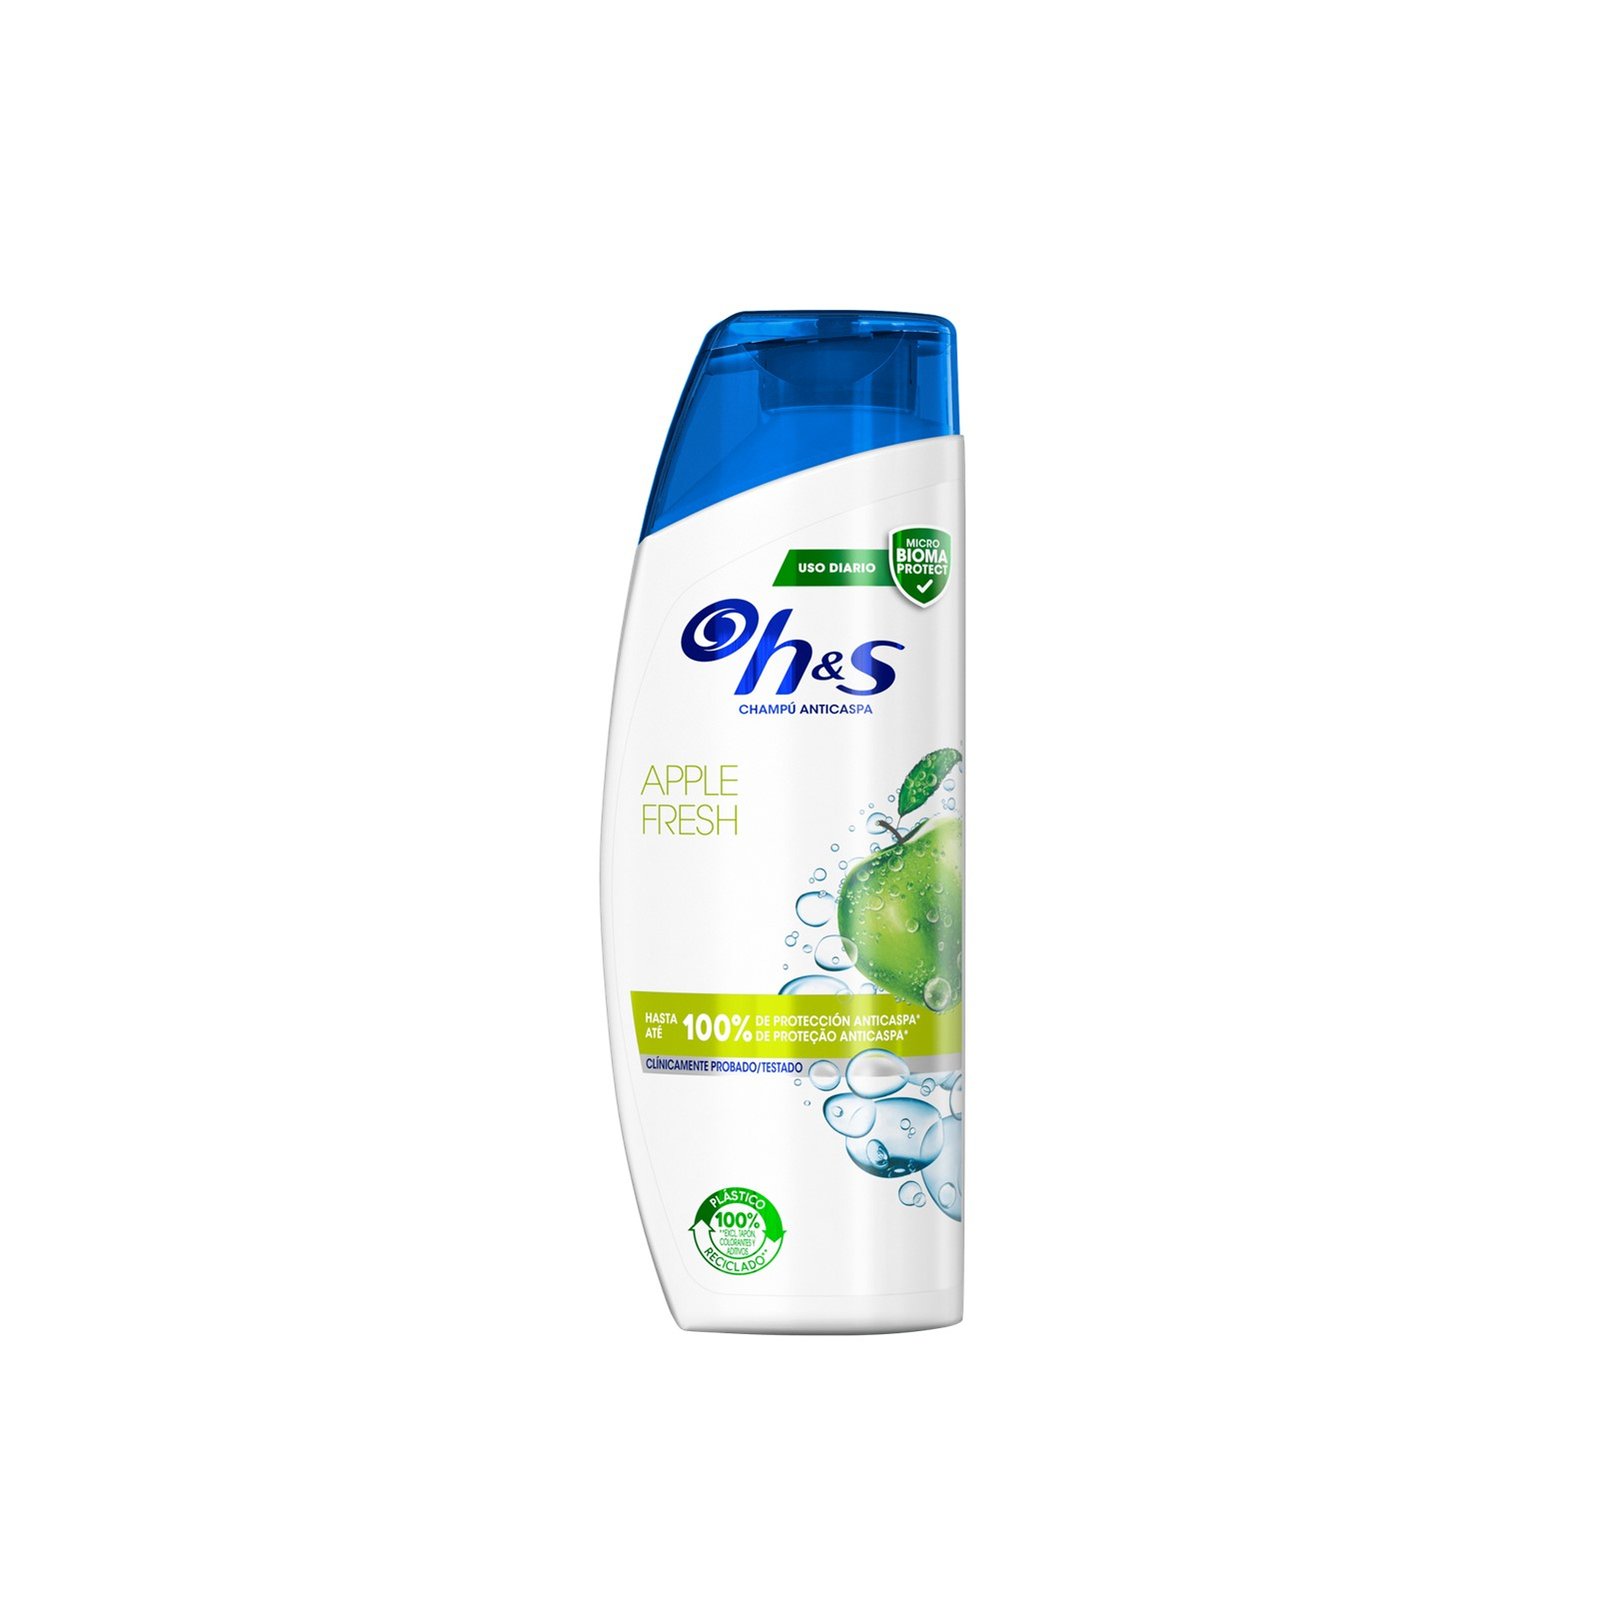 H&S Apple Fresh Shampoo 230ml